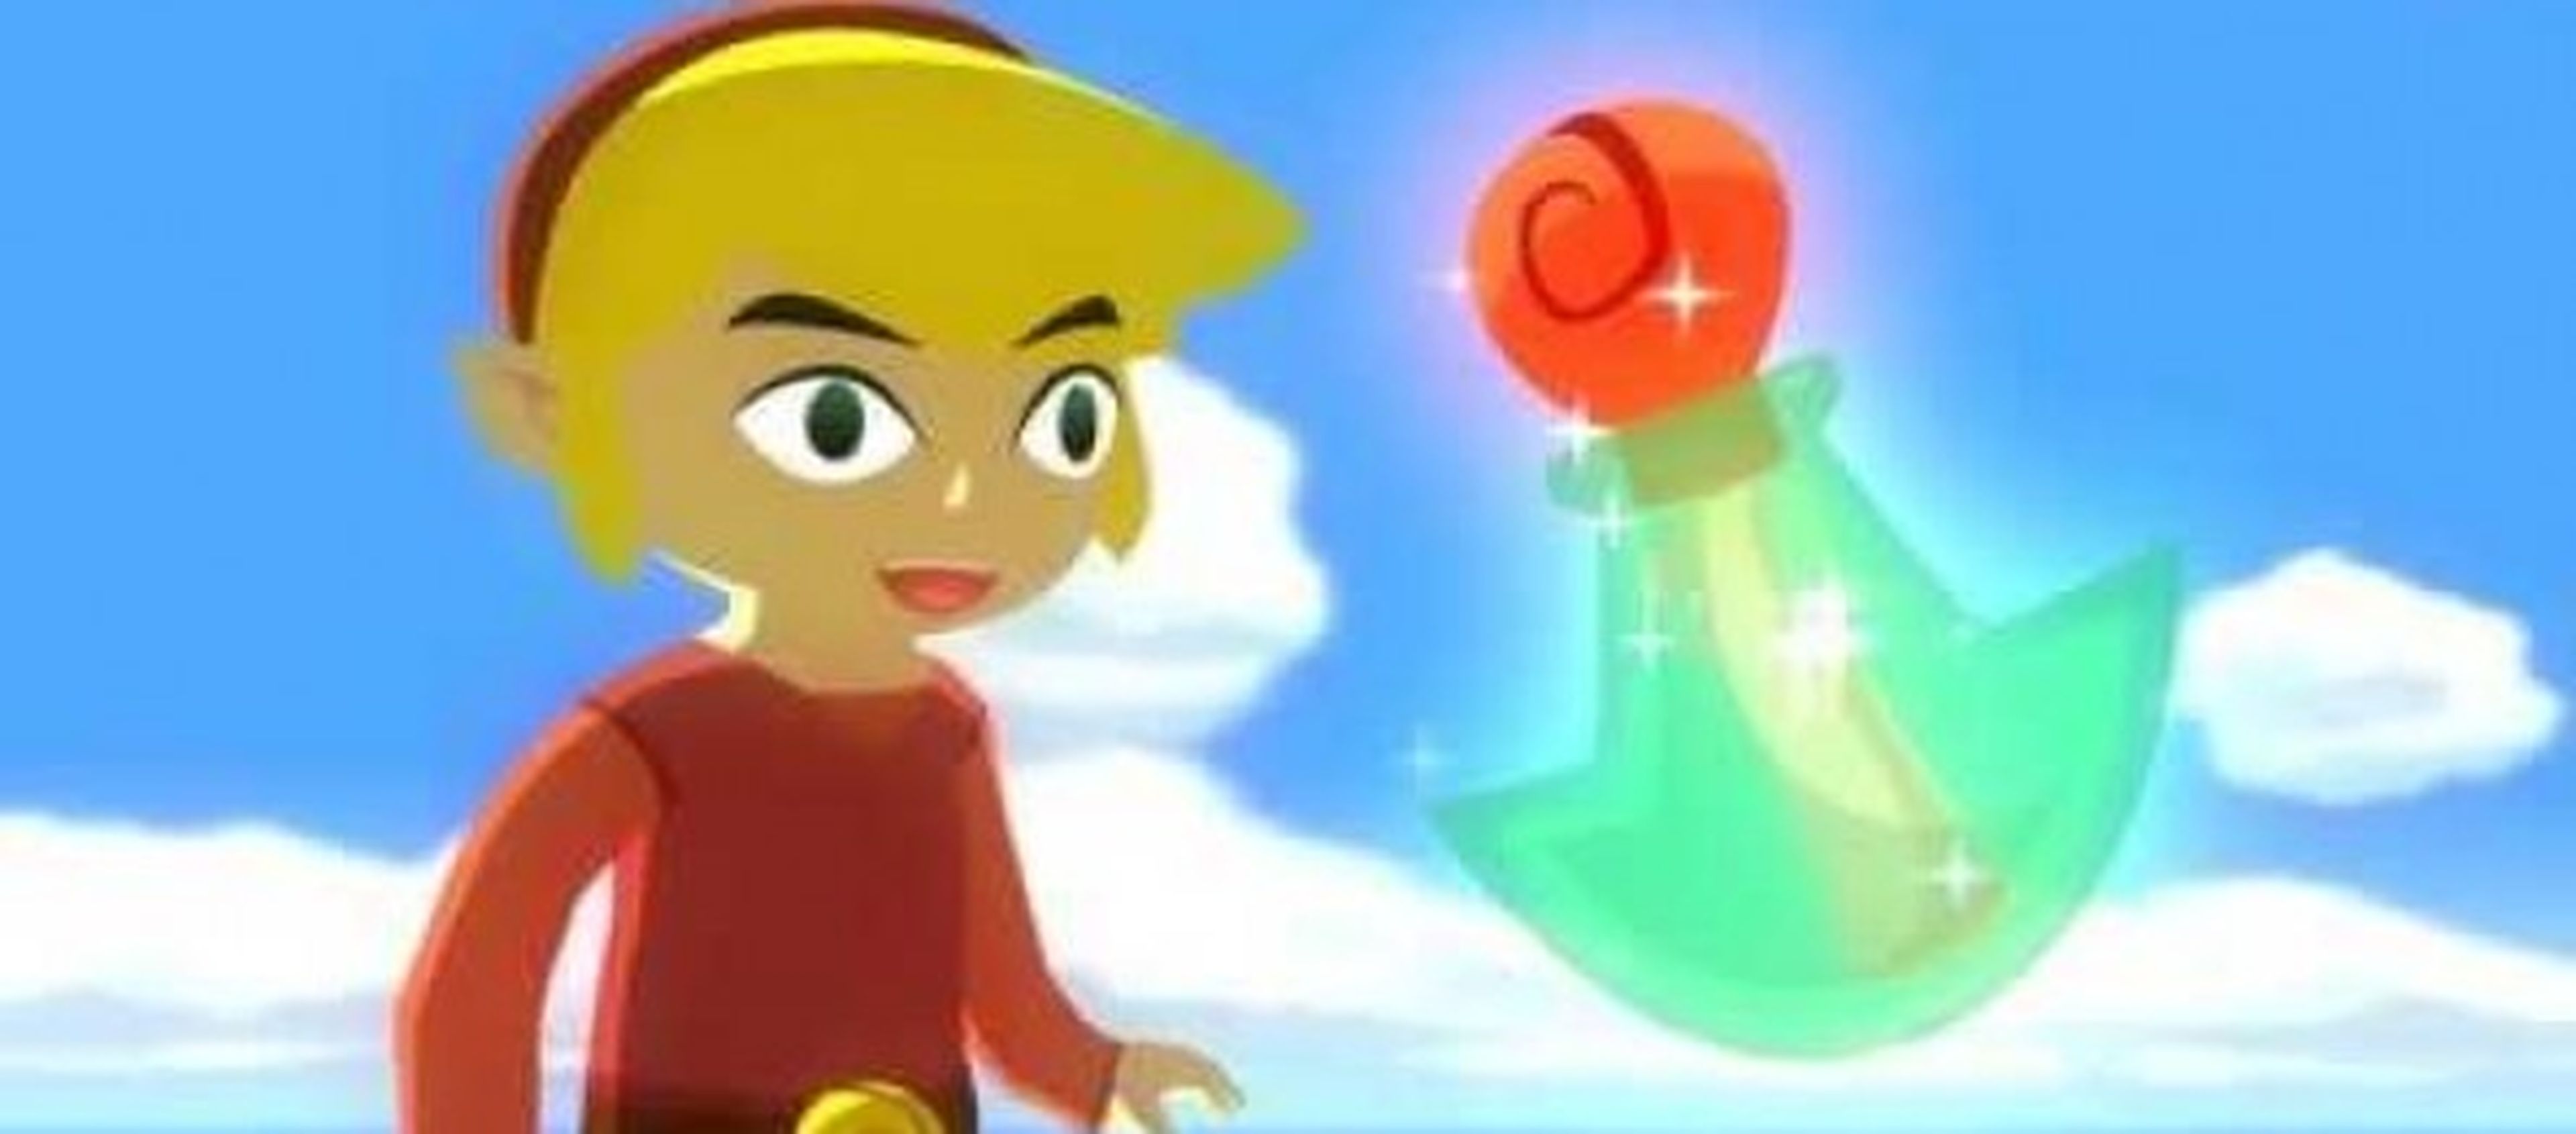 Detalles del multijugador de Zelda para Wii U